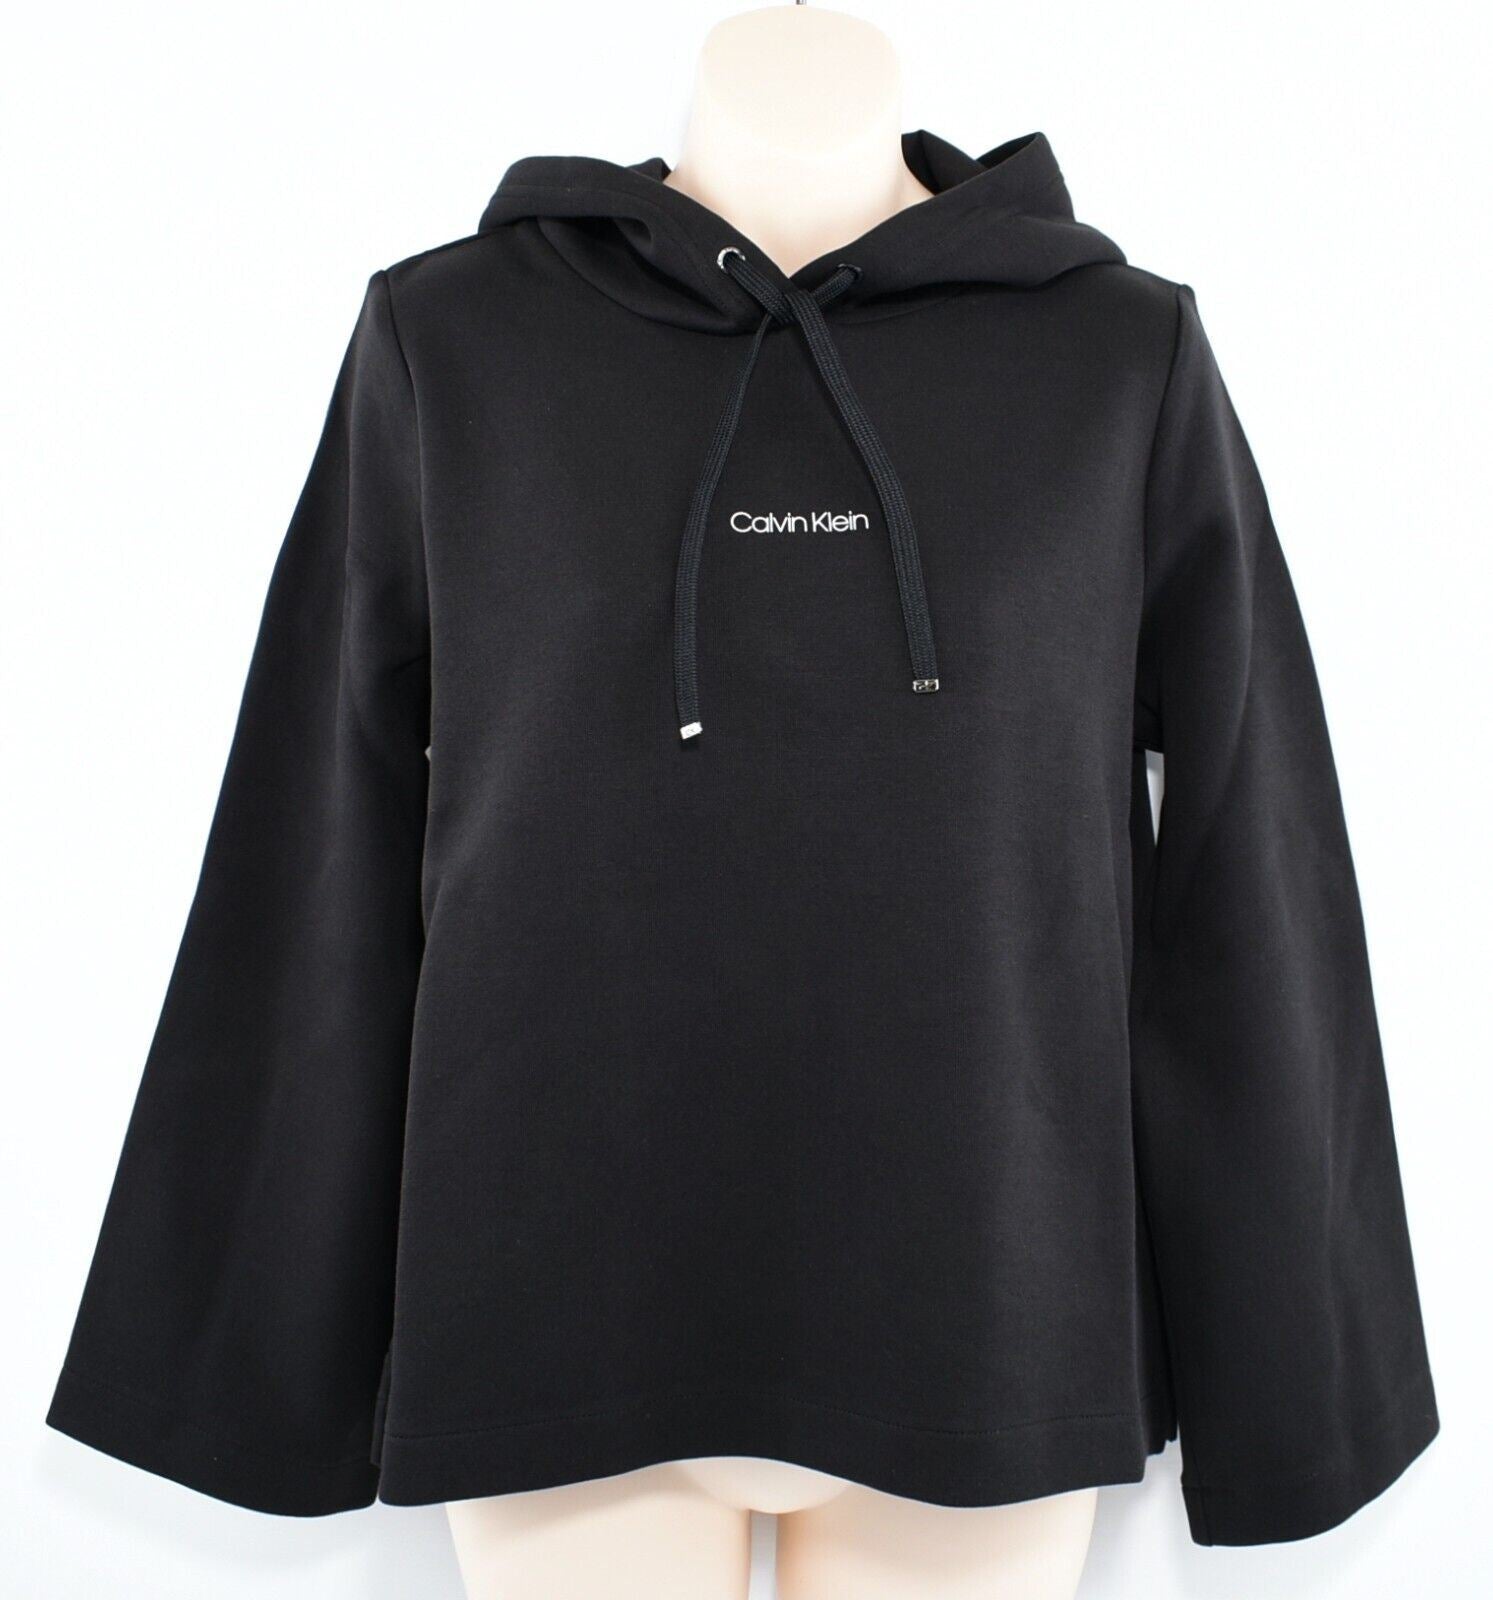 CALVIN KLEIN Women's Mini CK Cropped Hoodie Sweatshirt, Black, size XS (UK 8)